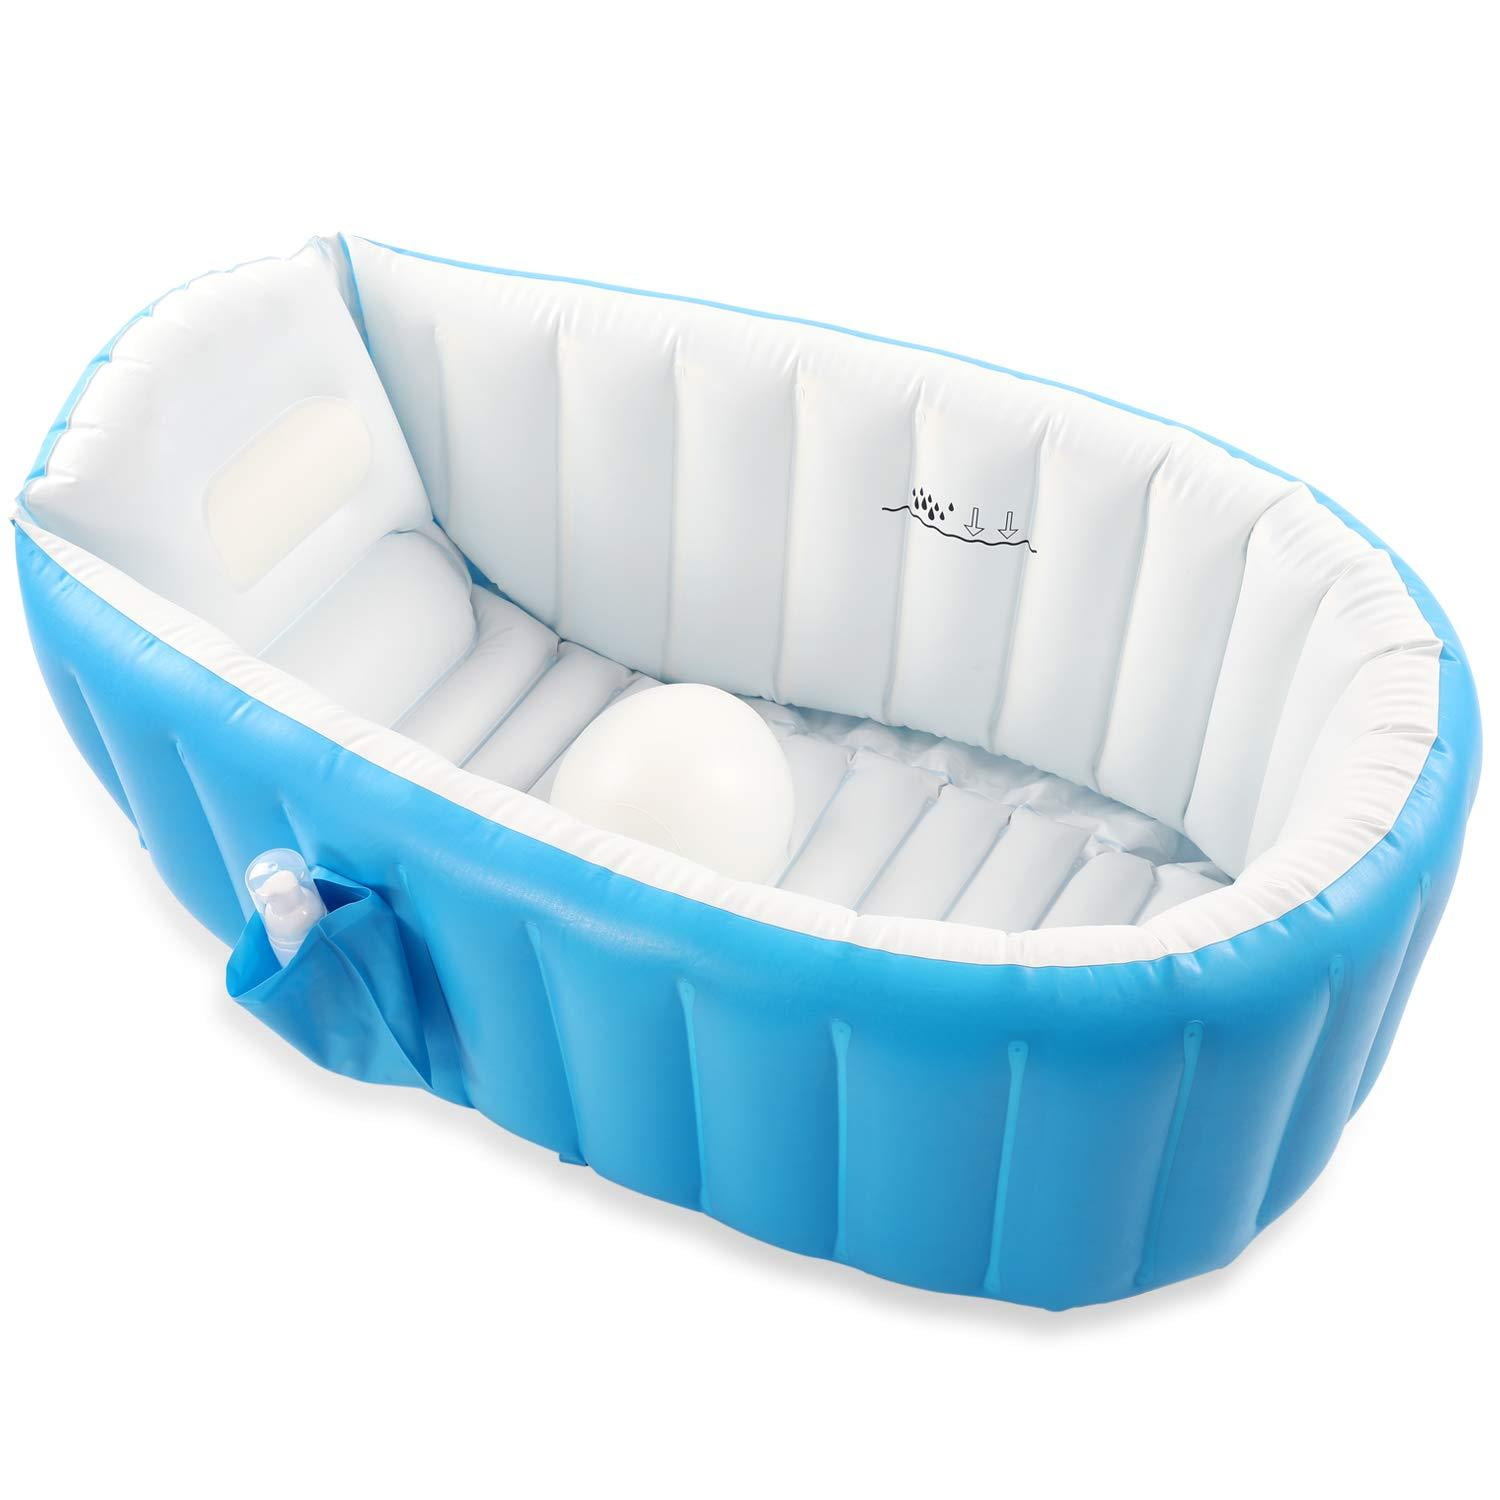 Pawsky Portable Infant Toddler Bathing Tub Non Slip Travel Bathtub Mini Air Swimming Pool Kids Thick Foldable Shower Basin Blue Baby Inflatable Bathtub 